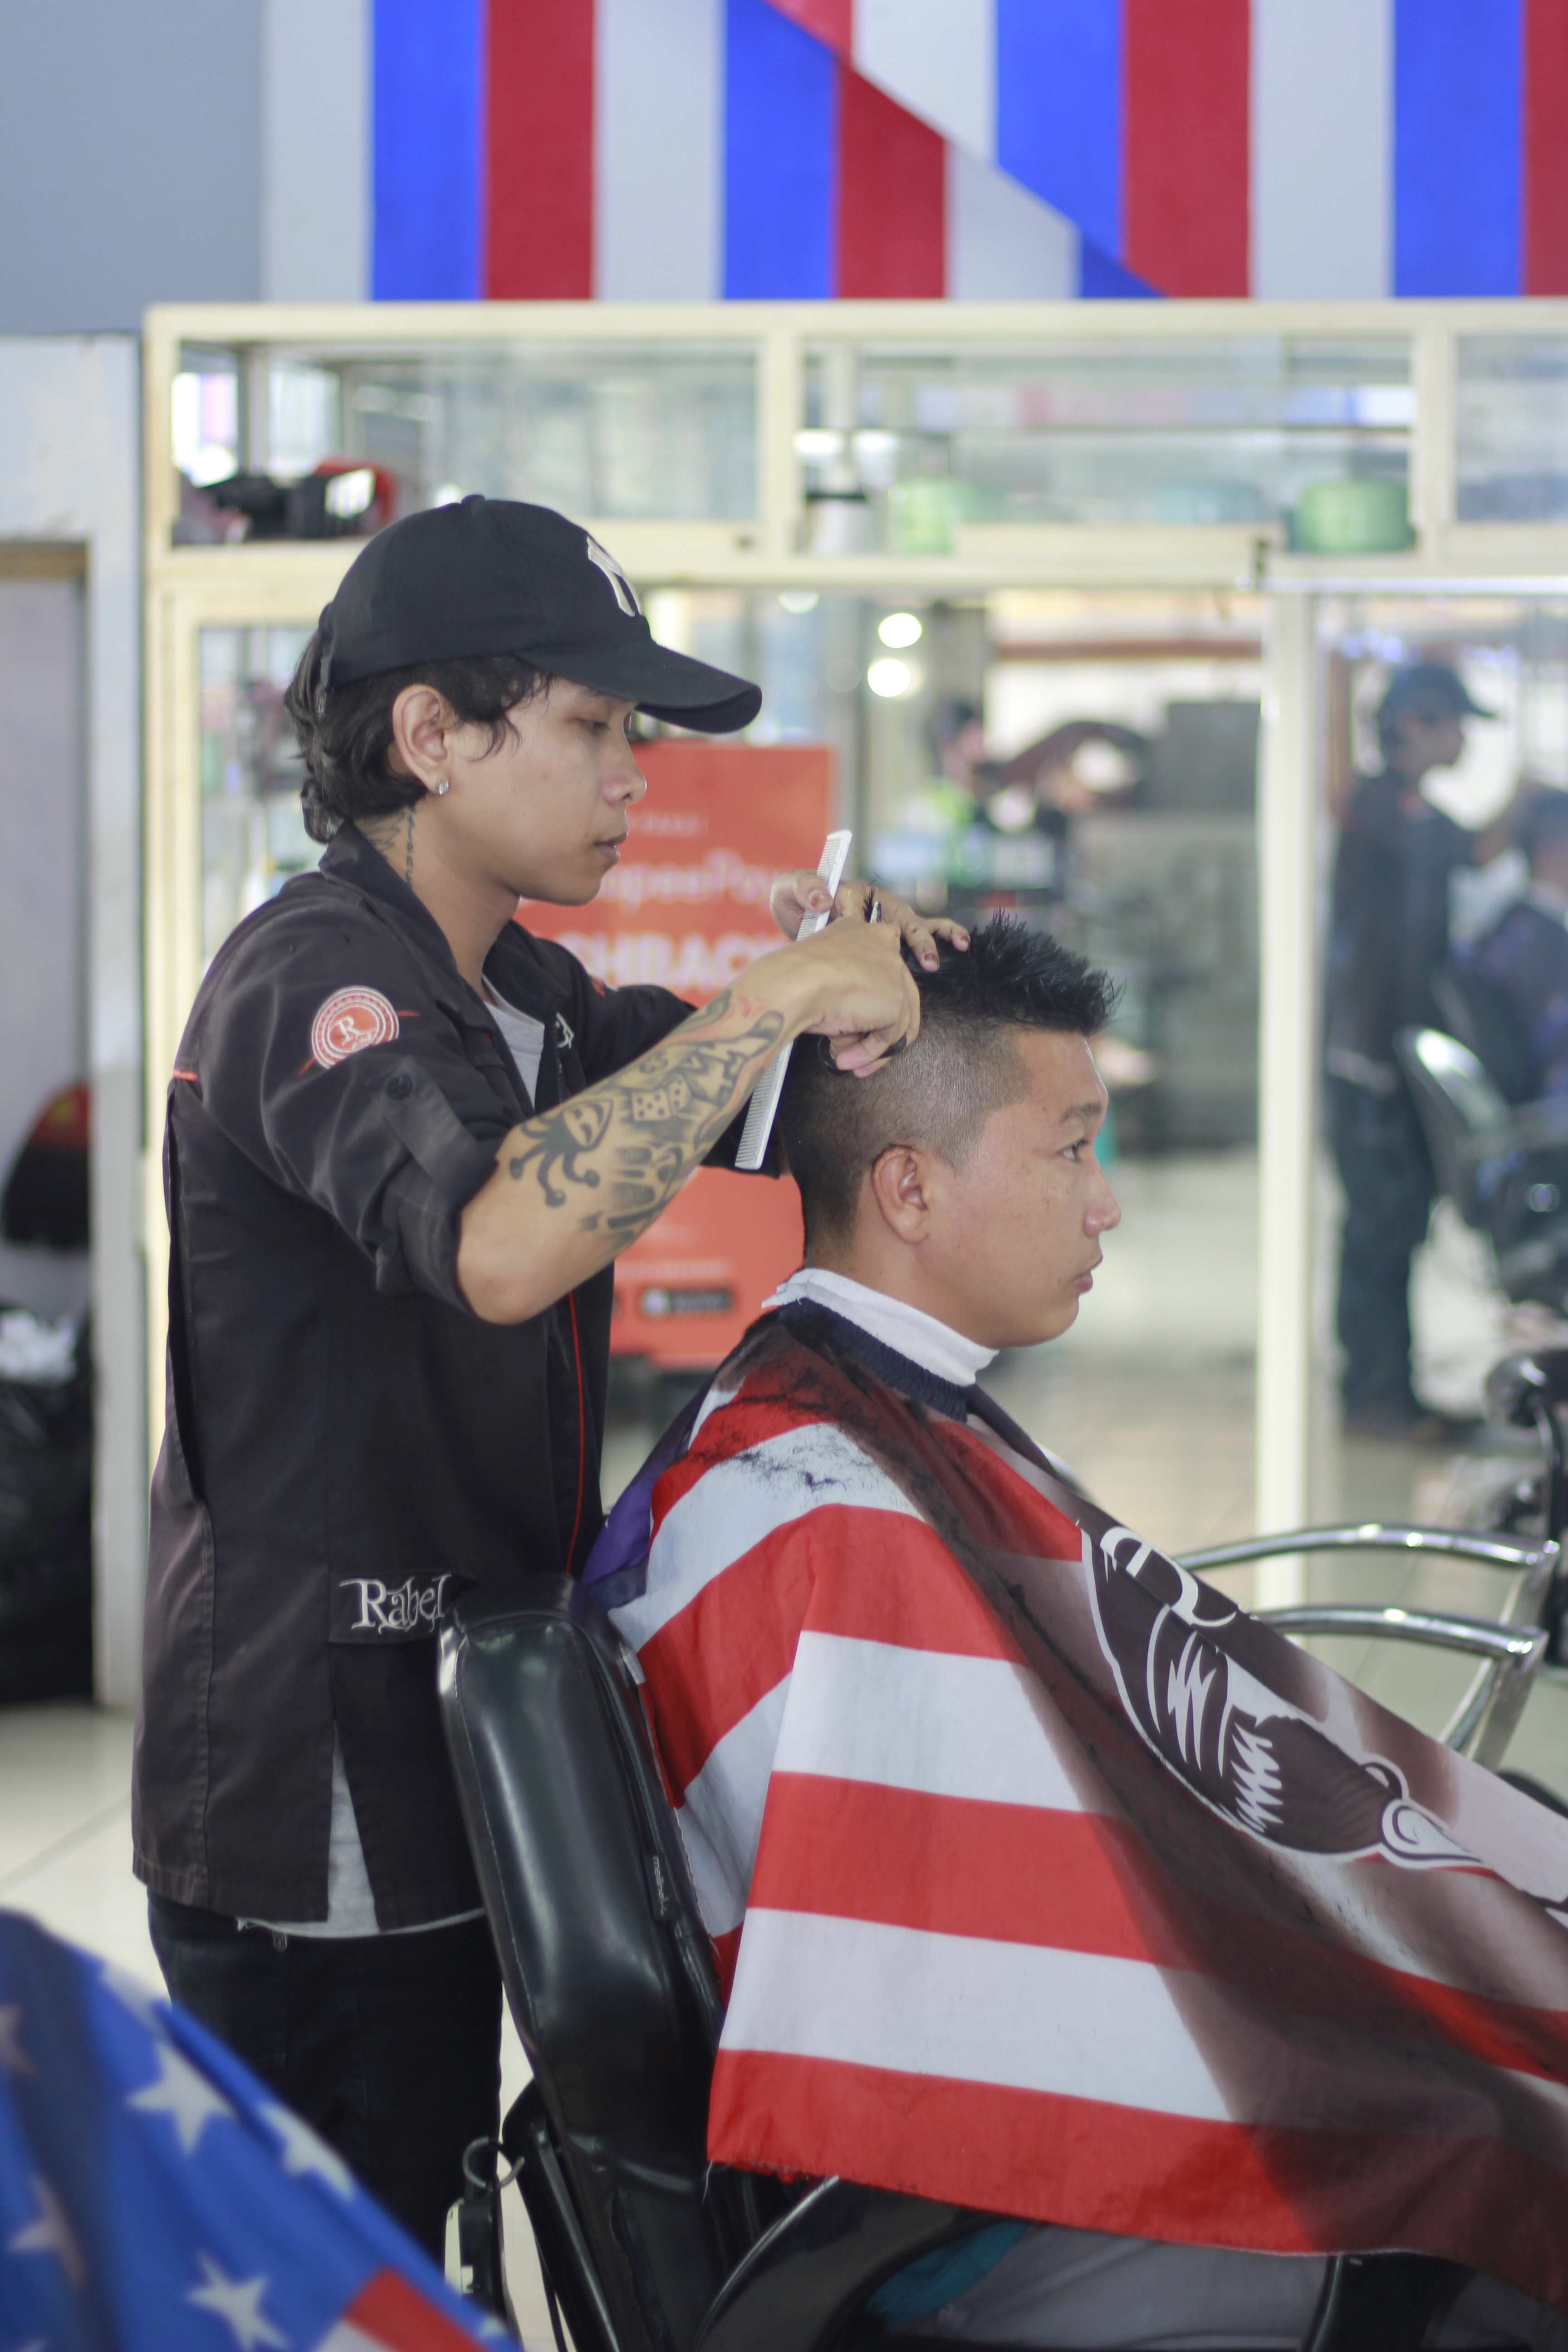 Rekomendasi Tempat Cukur Rambut Di Kelurahan Tlogowaru Murah